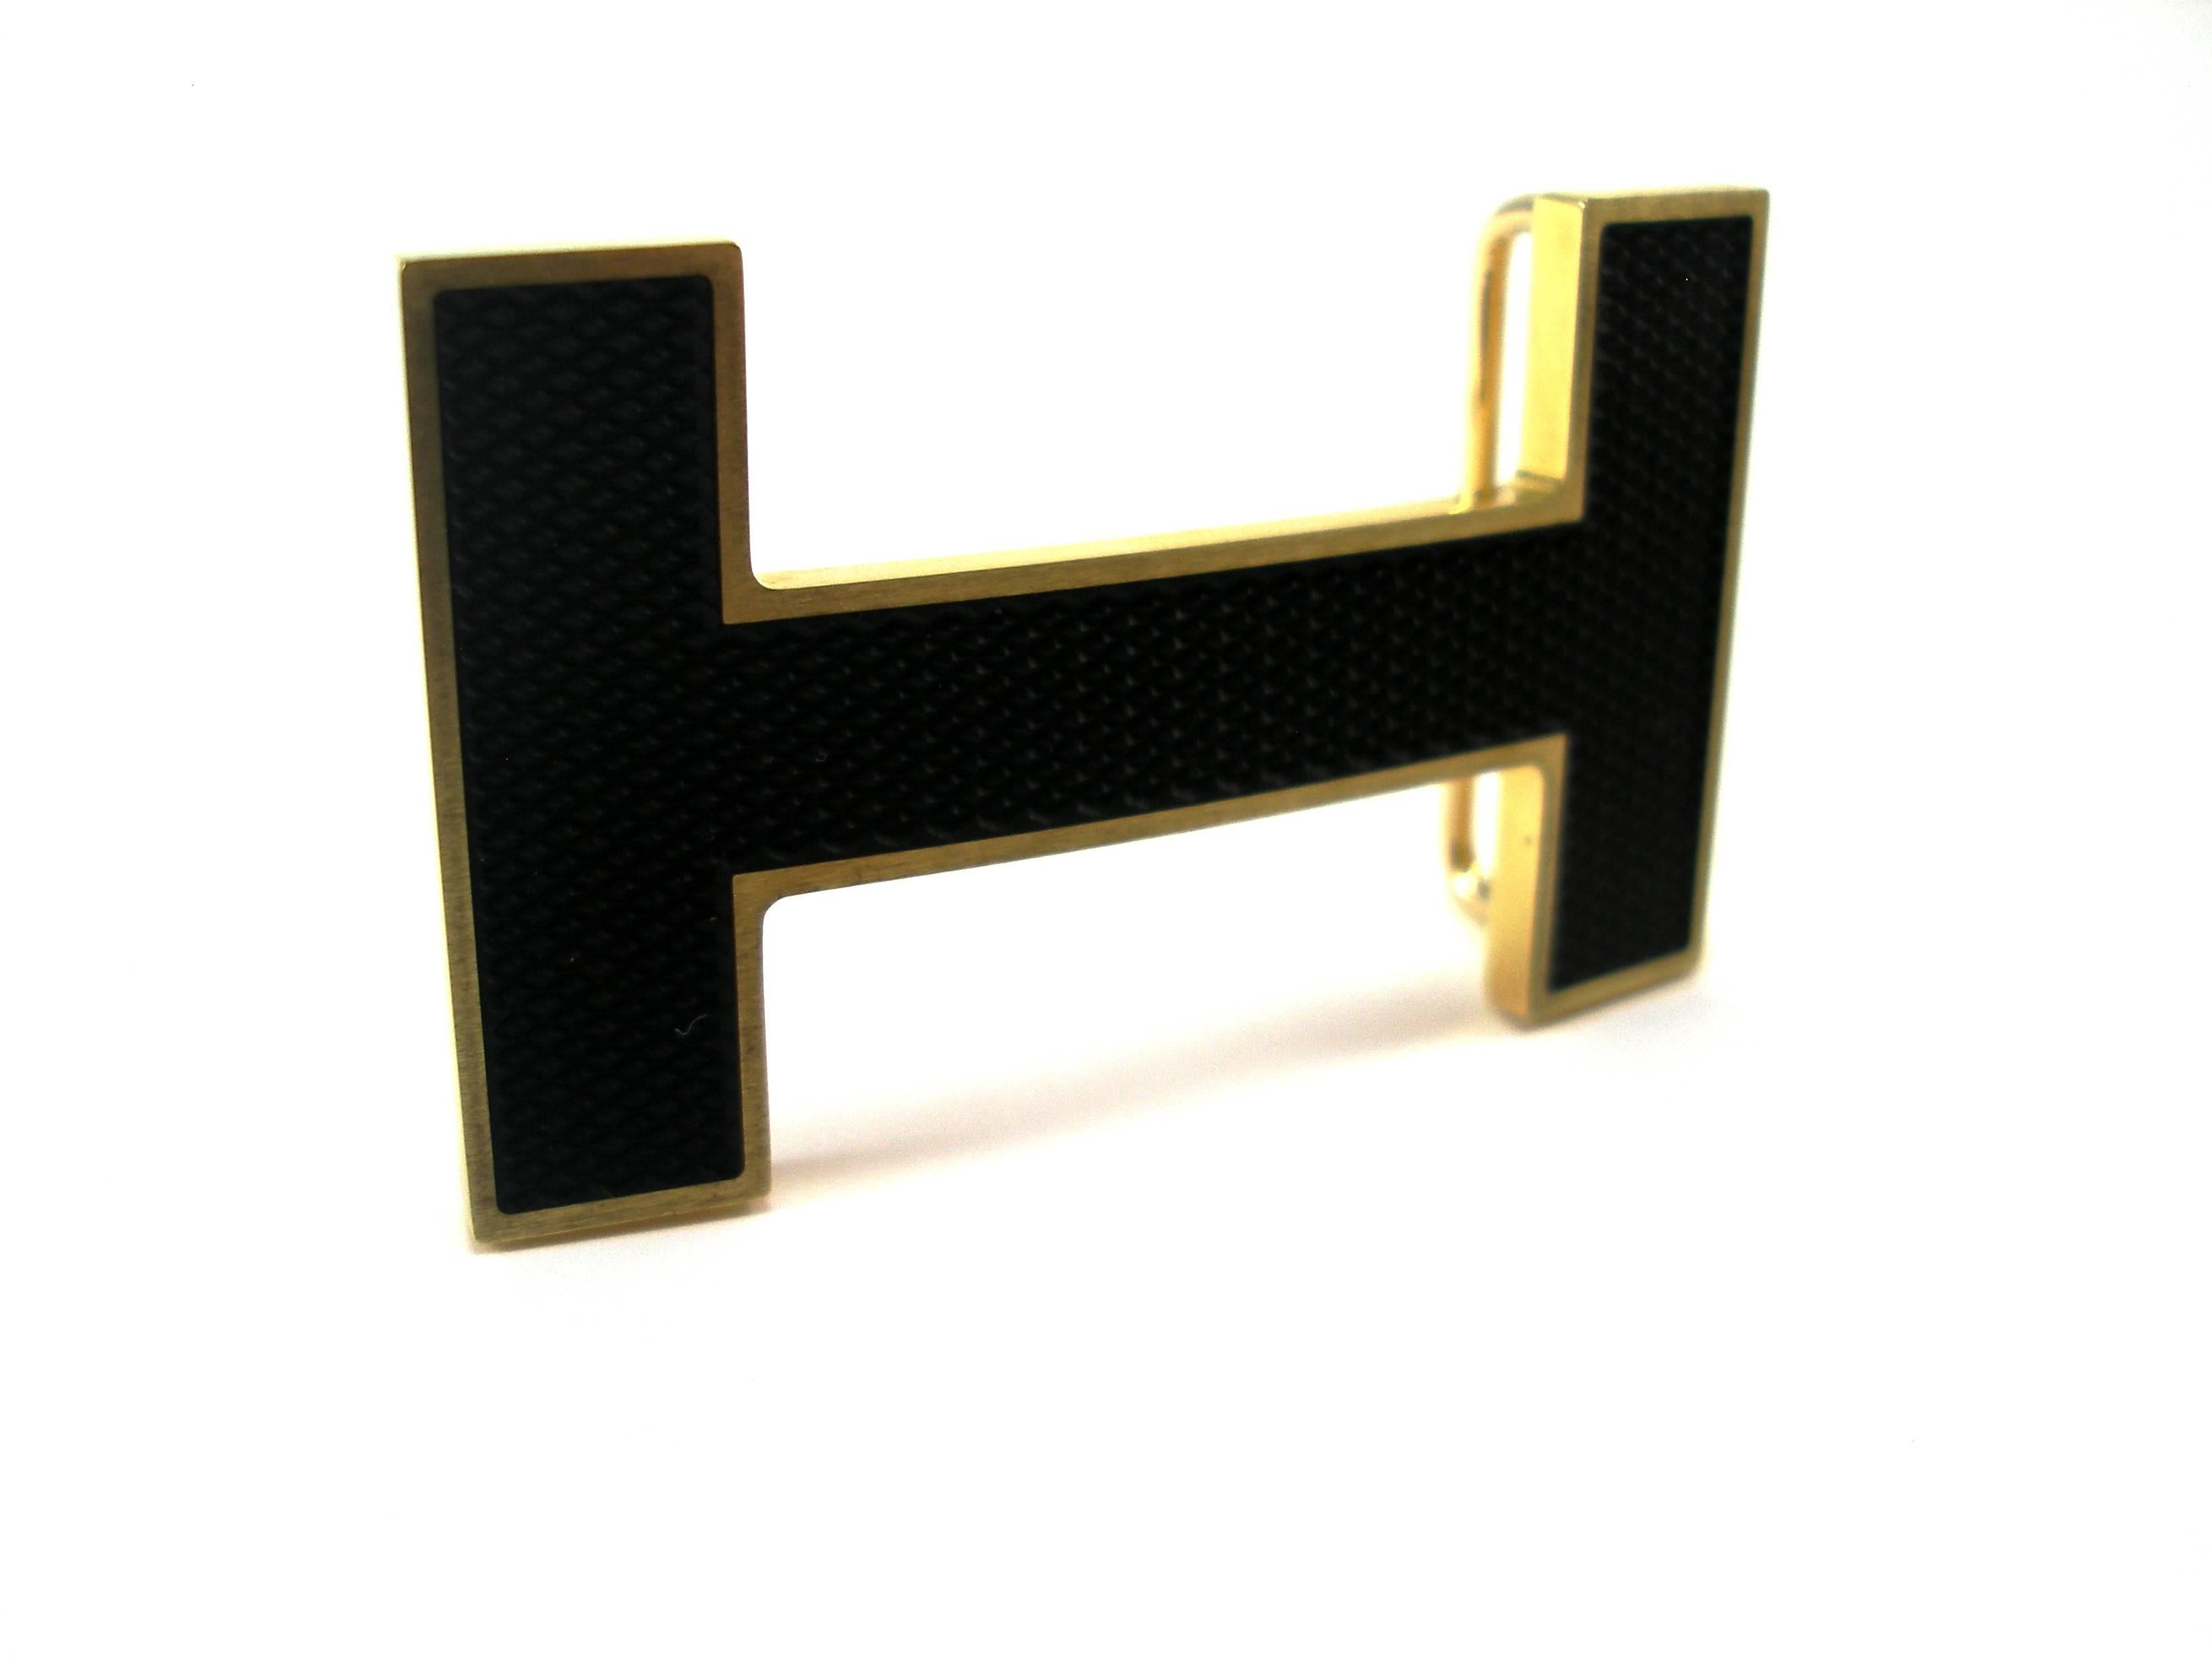 Black Hermes QUIZZ belt buckle 32mm black and gold 